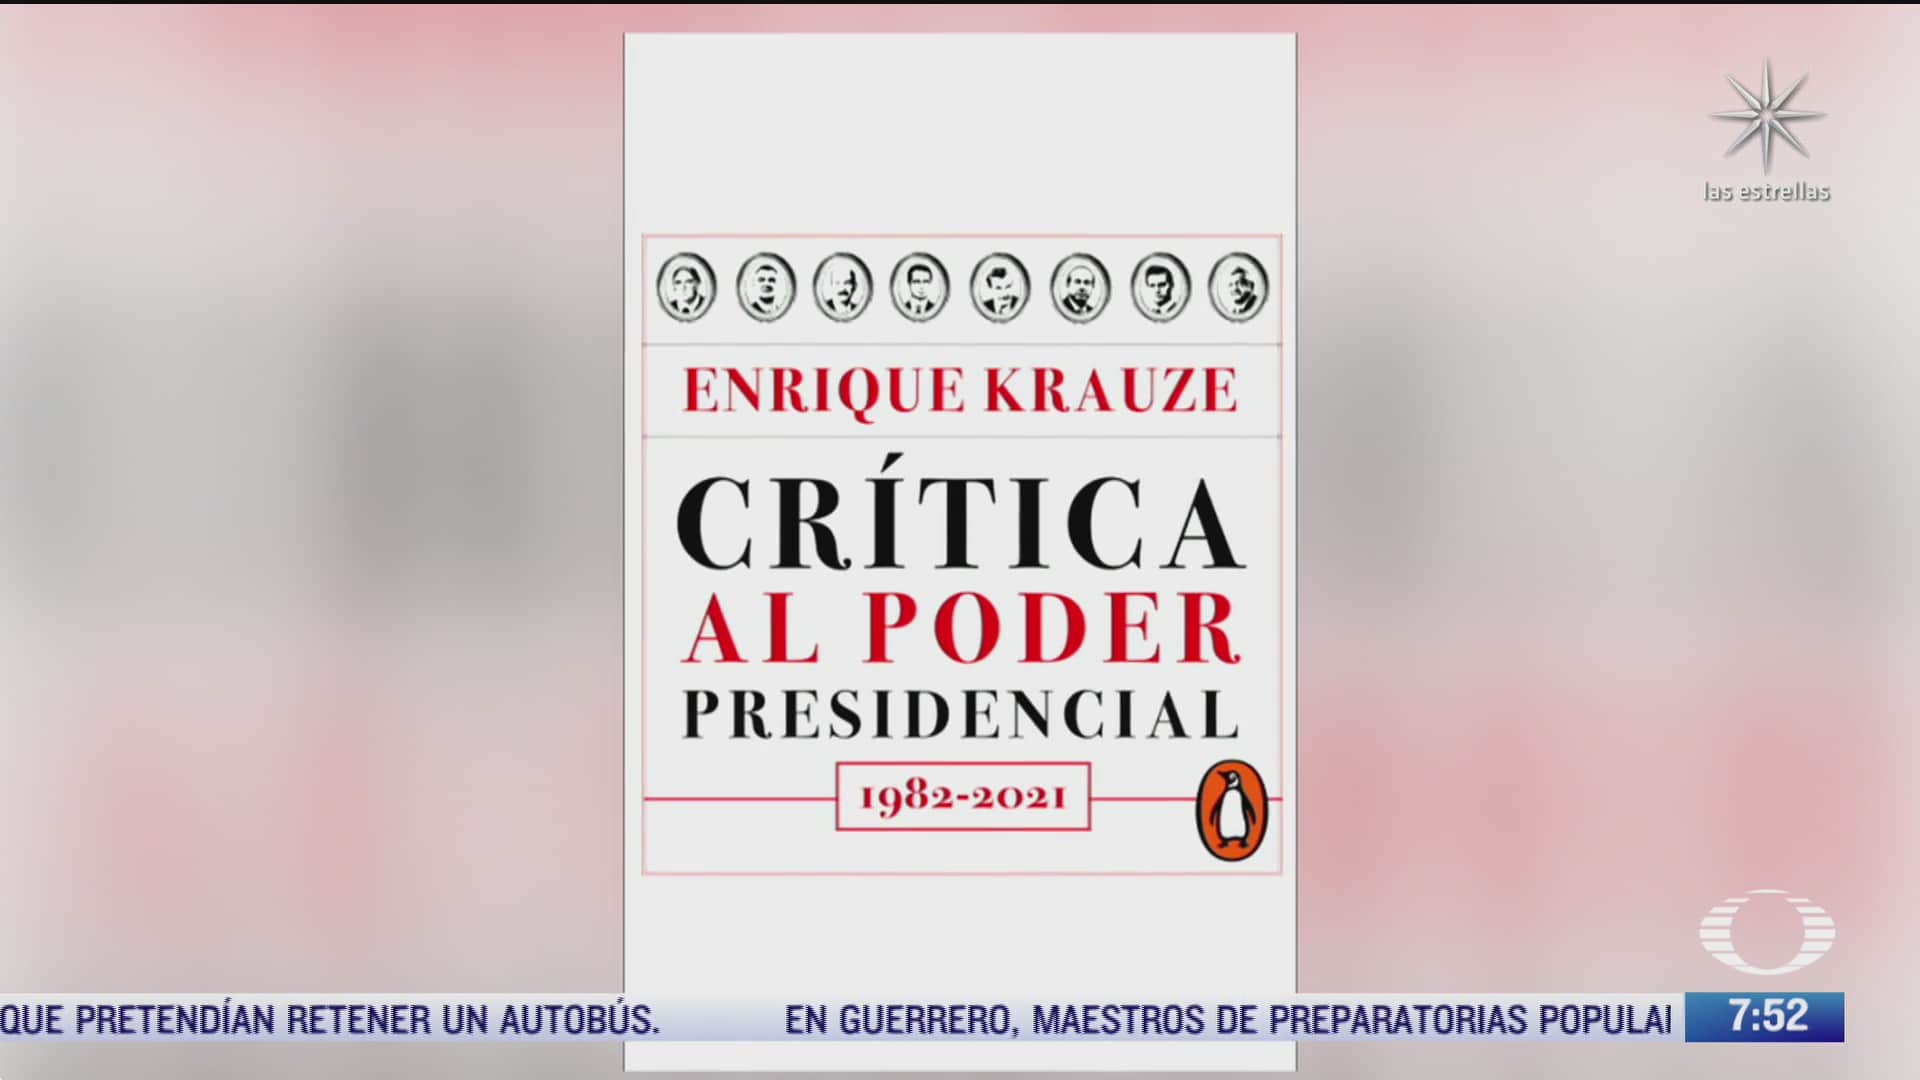 despierta con cultura critica al poder presidencial de enrique krauze